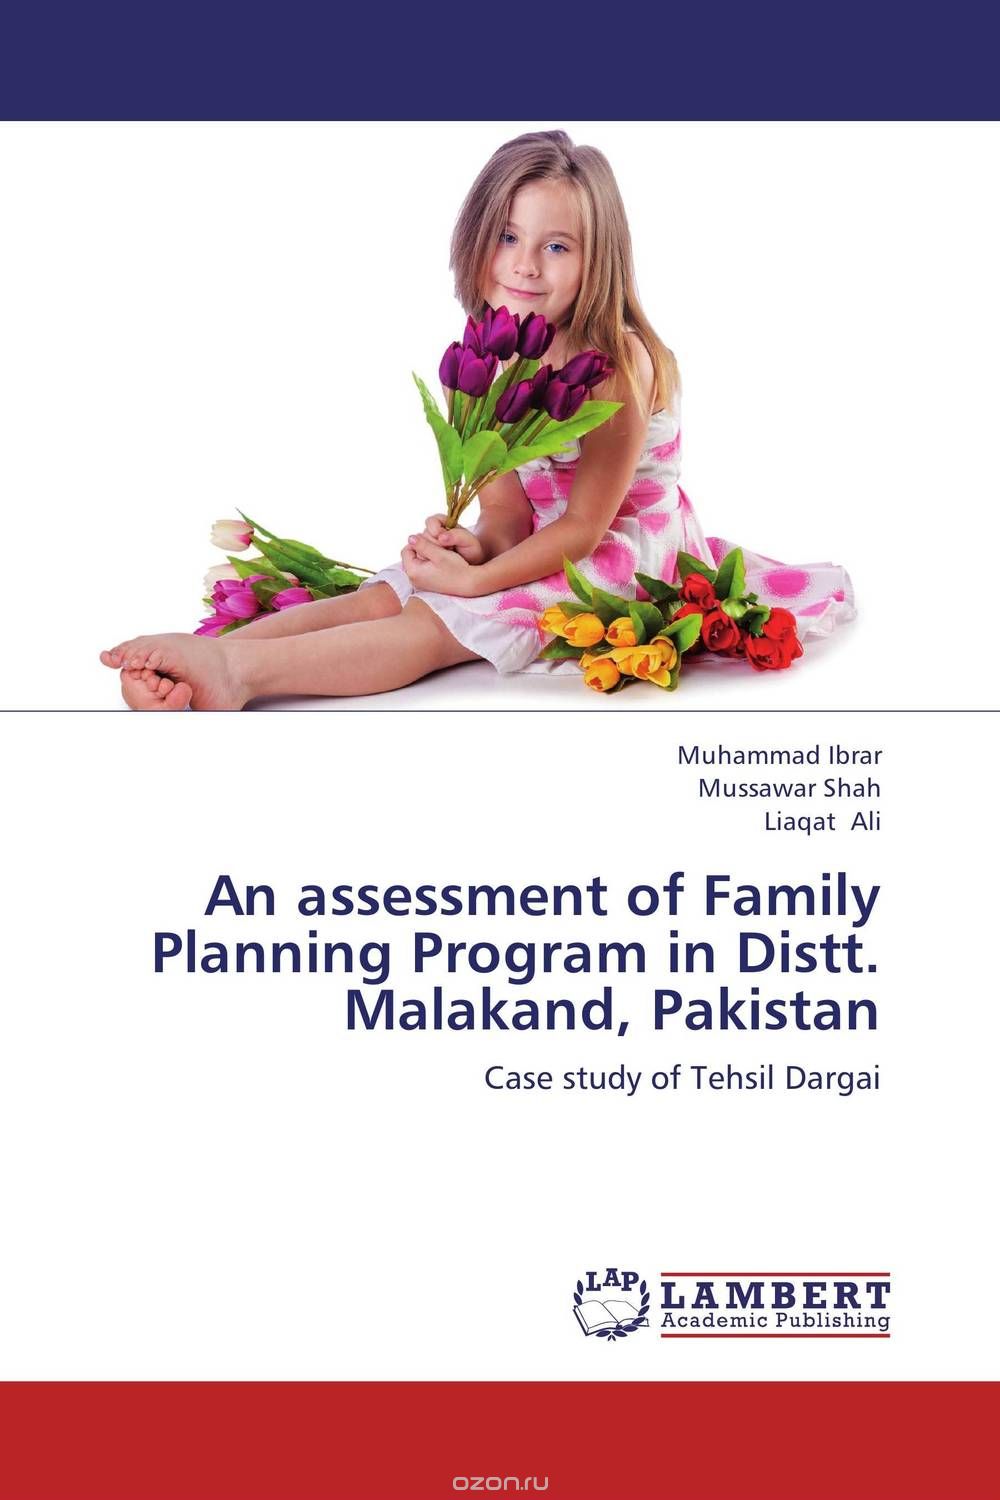 An assessment of Family Planning Program in Distt. Malakand, Pakistan